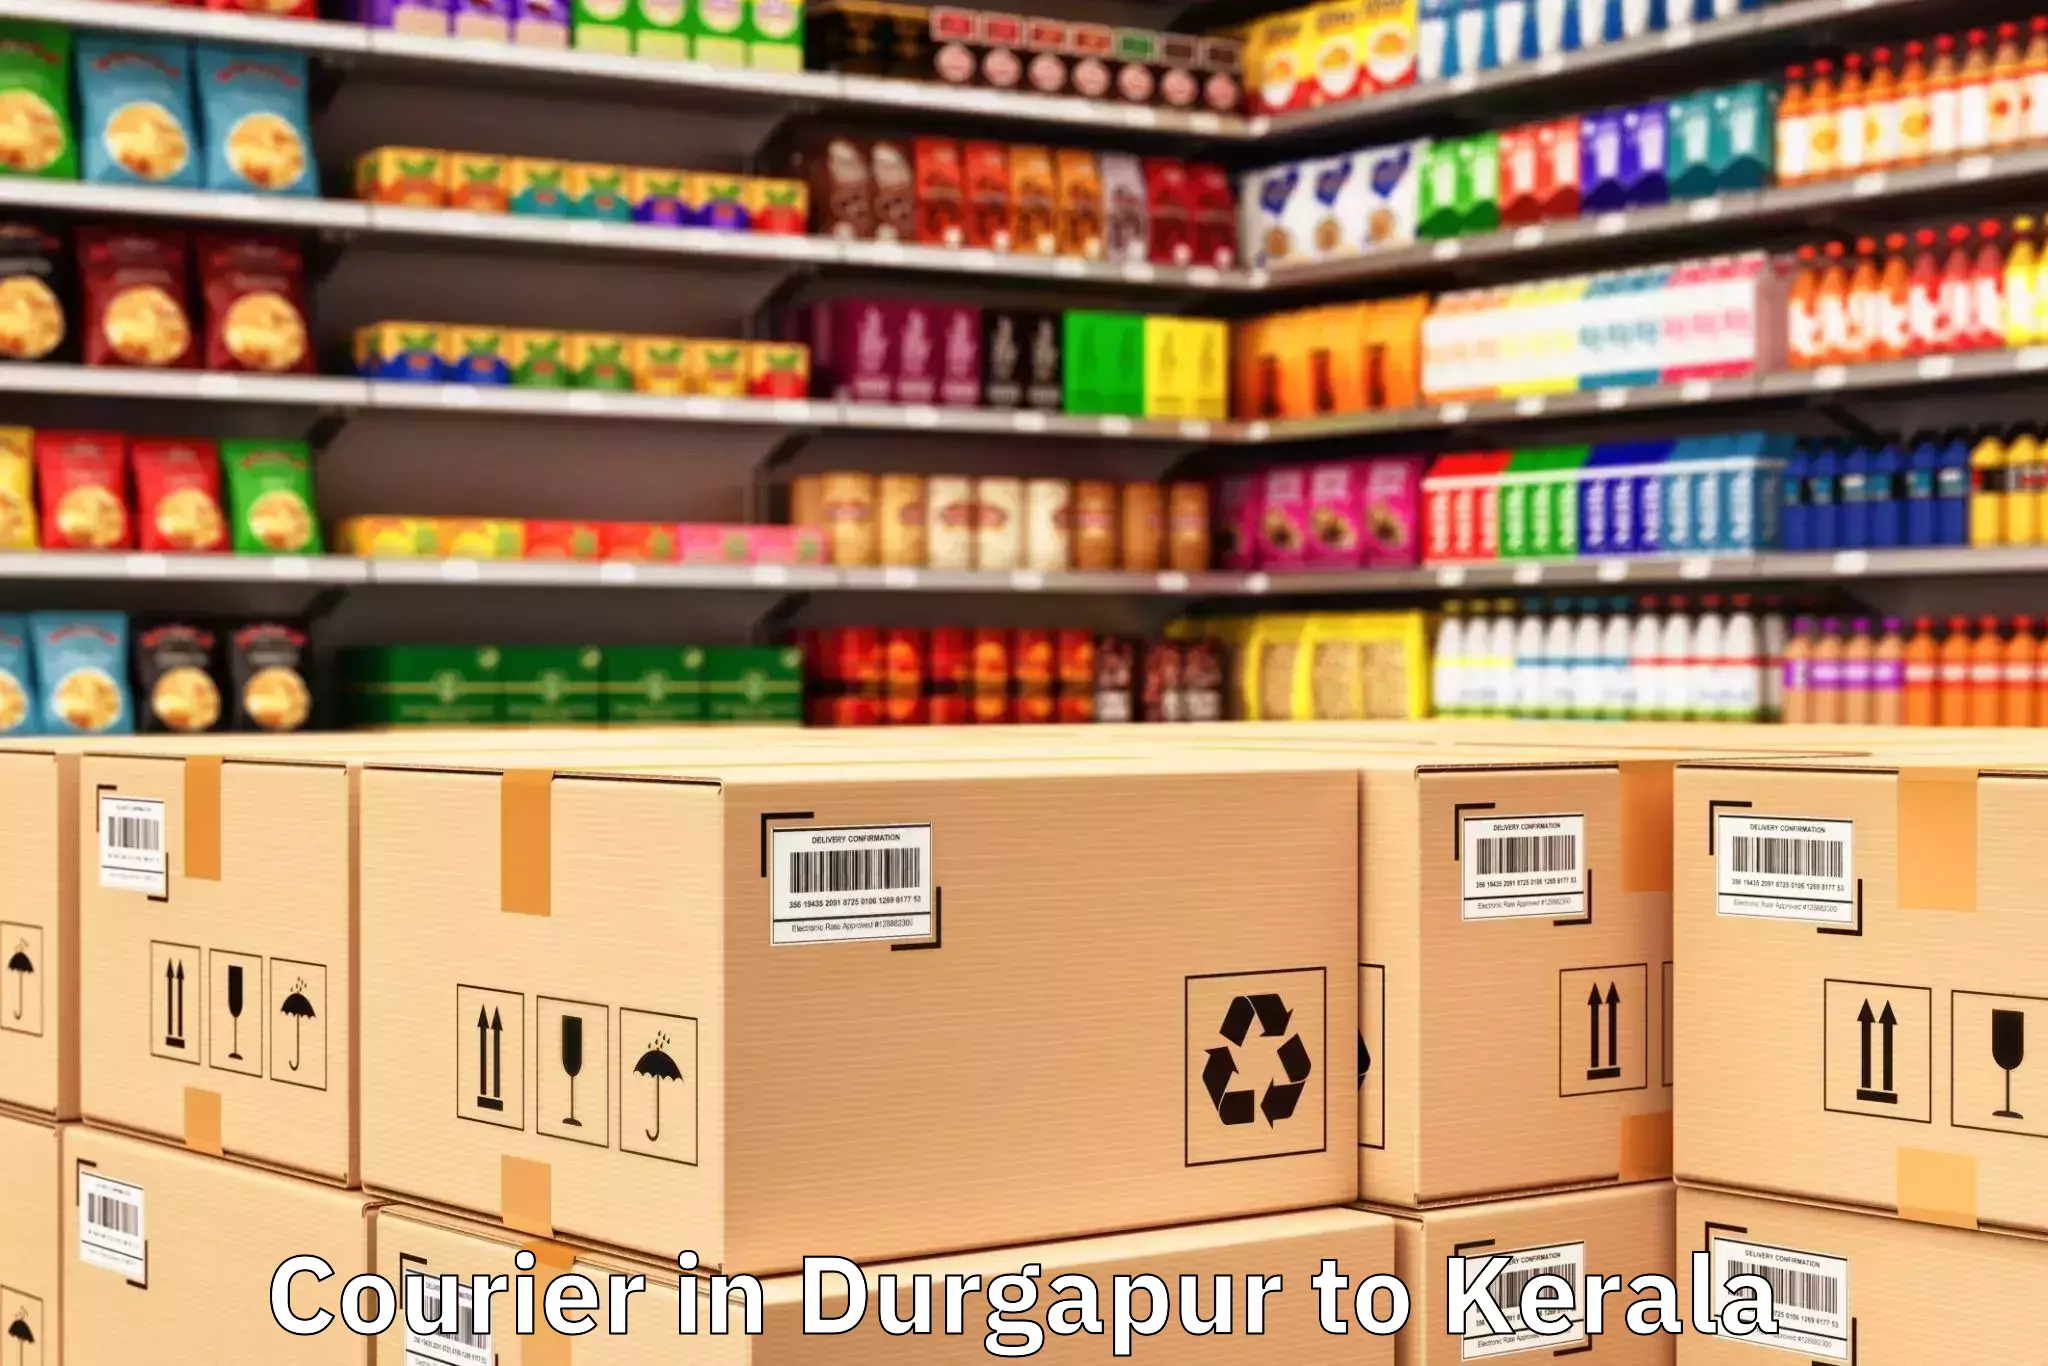 Hassle-Free Durgapur to Kuttikol Courier